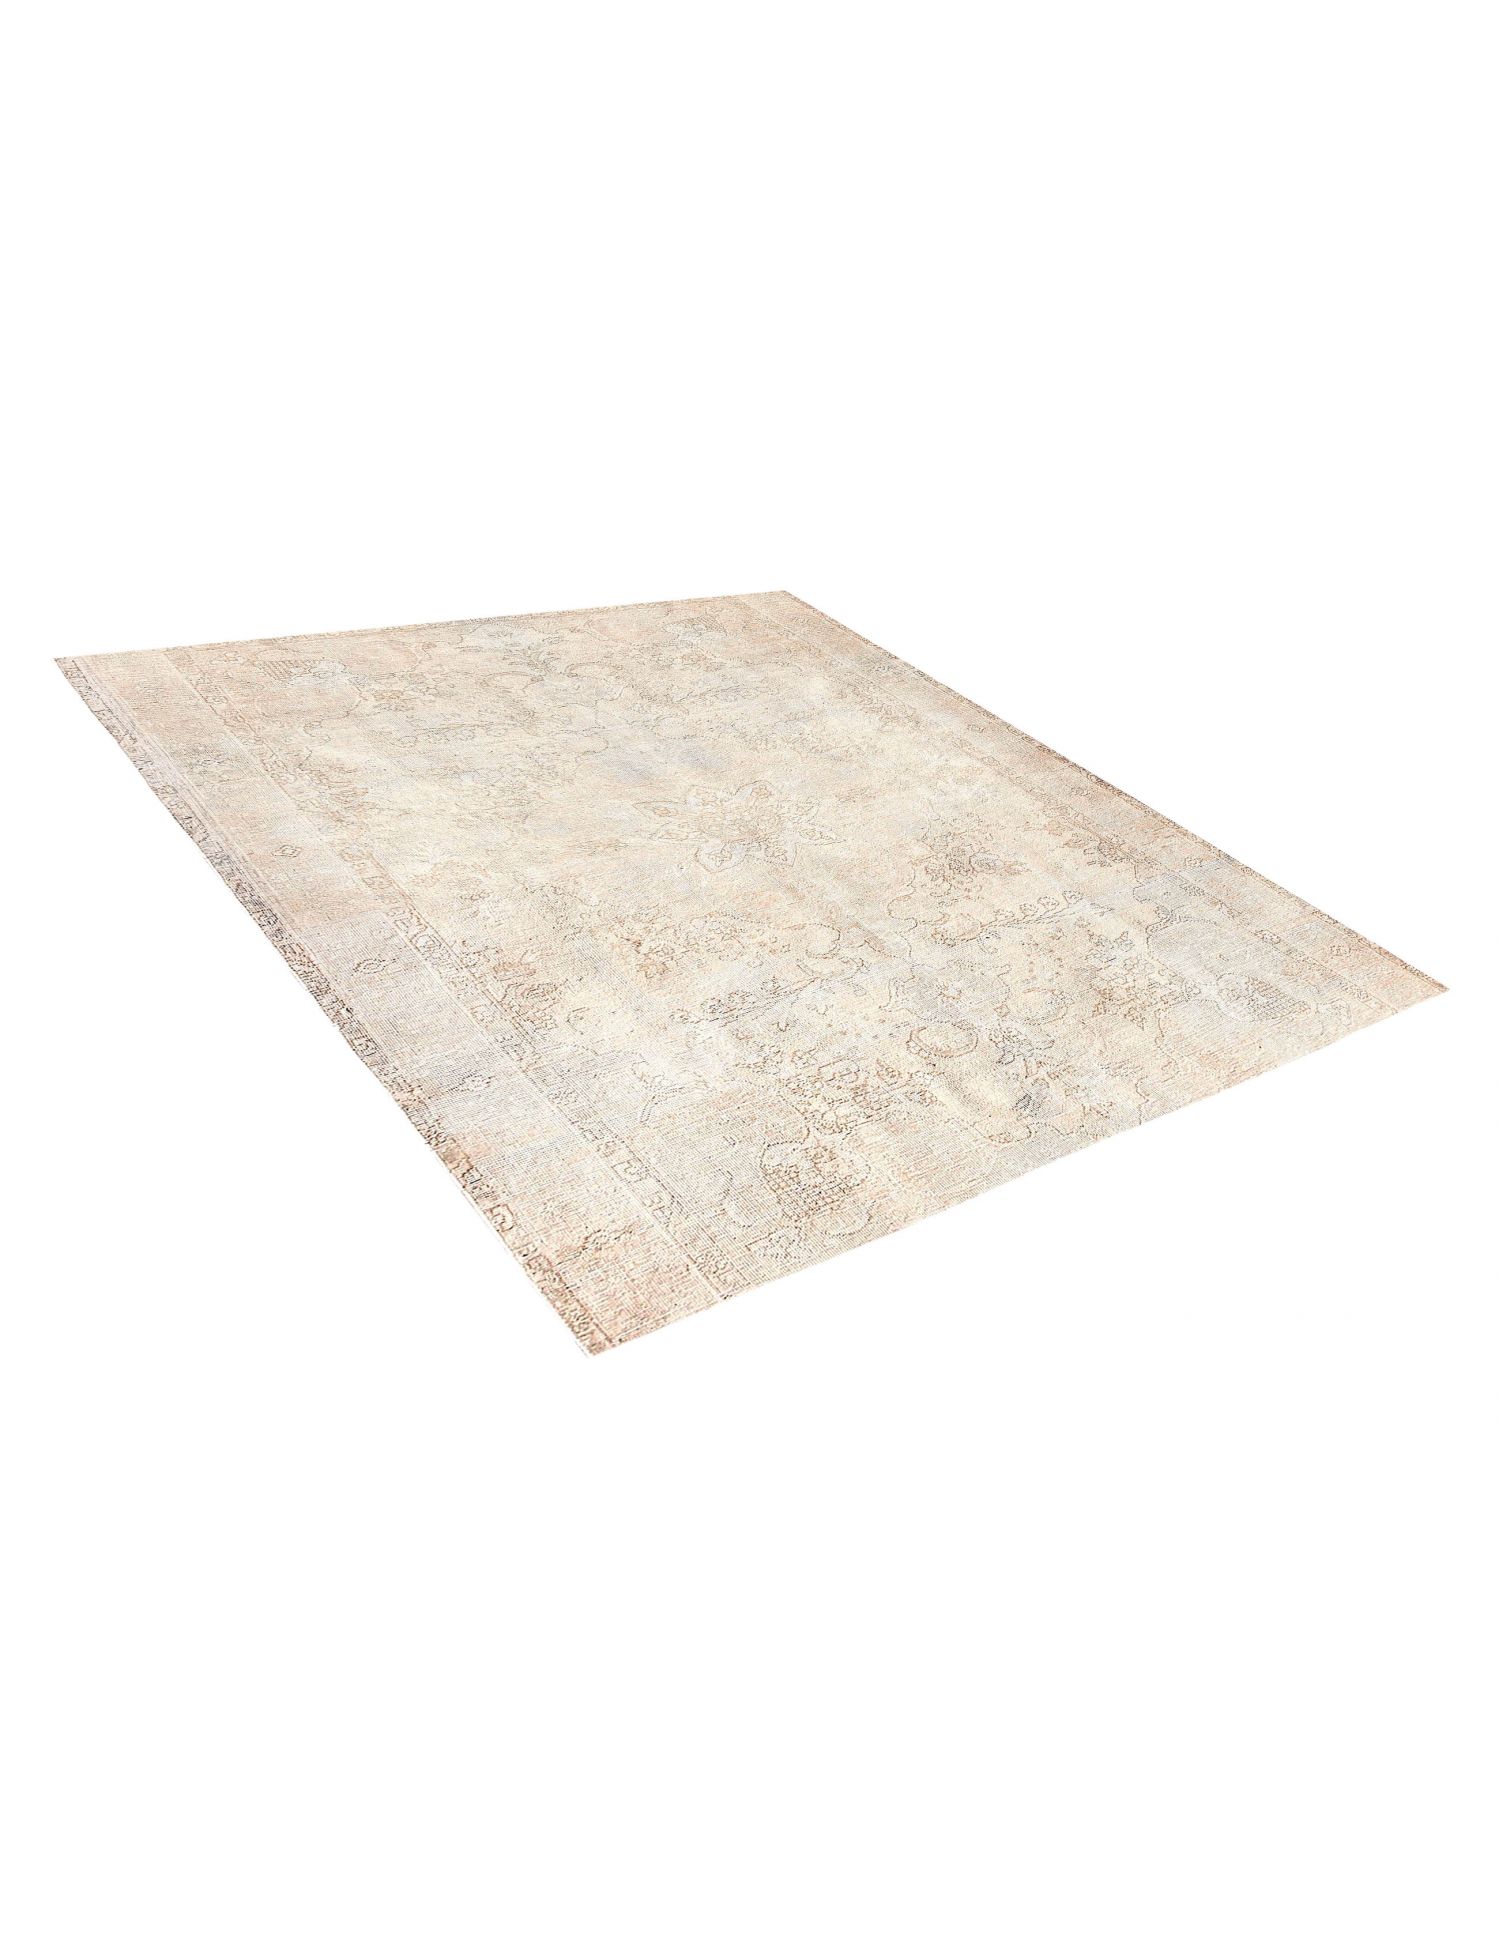 Quadrat  Vintage Teppich  beige <br/>200 x 200 cm